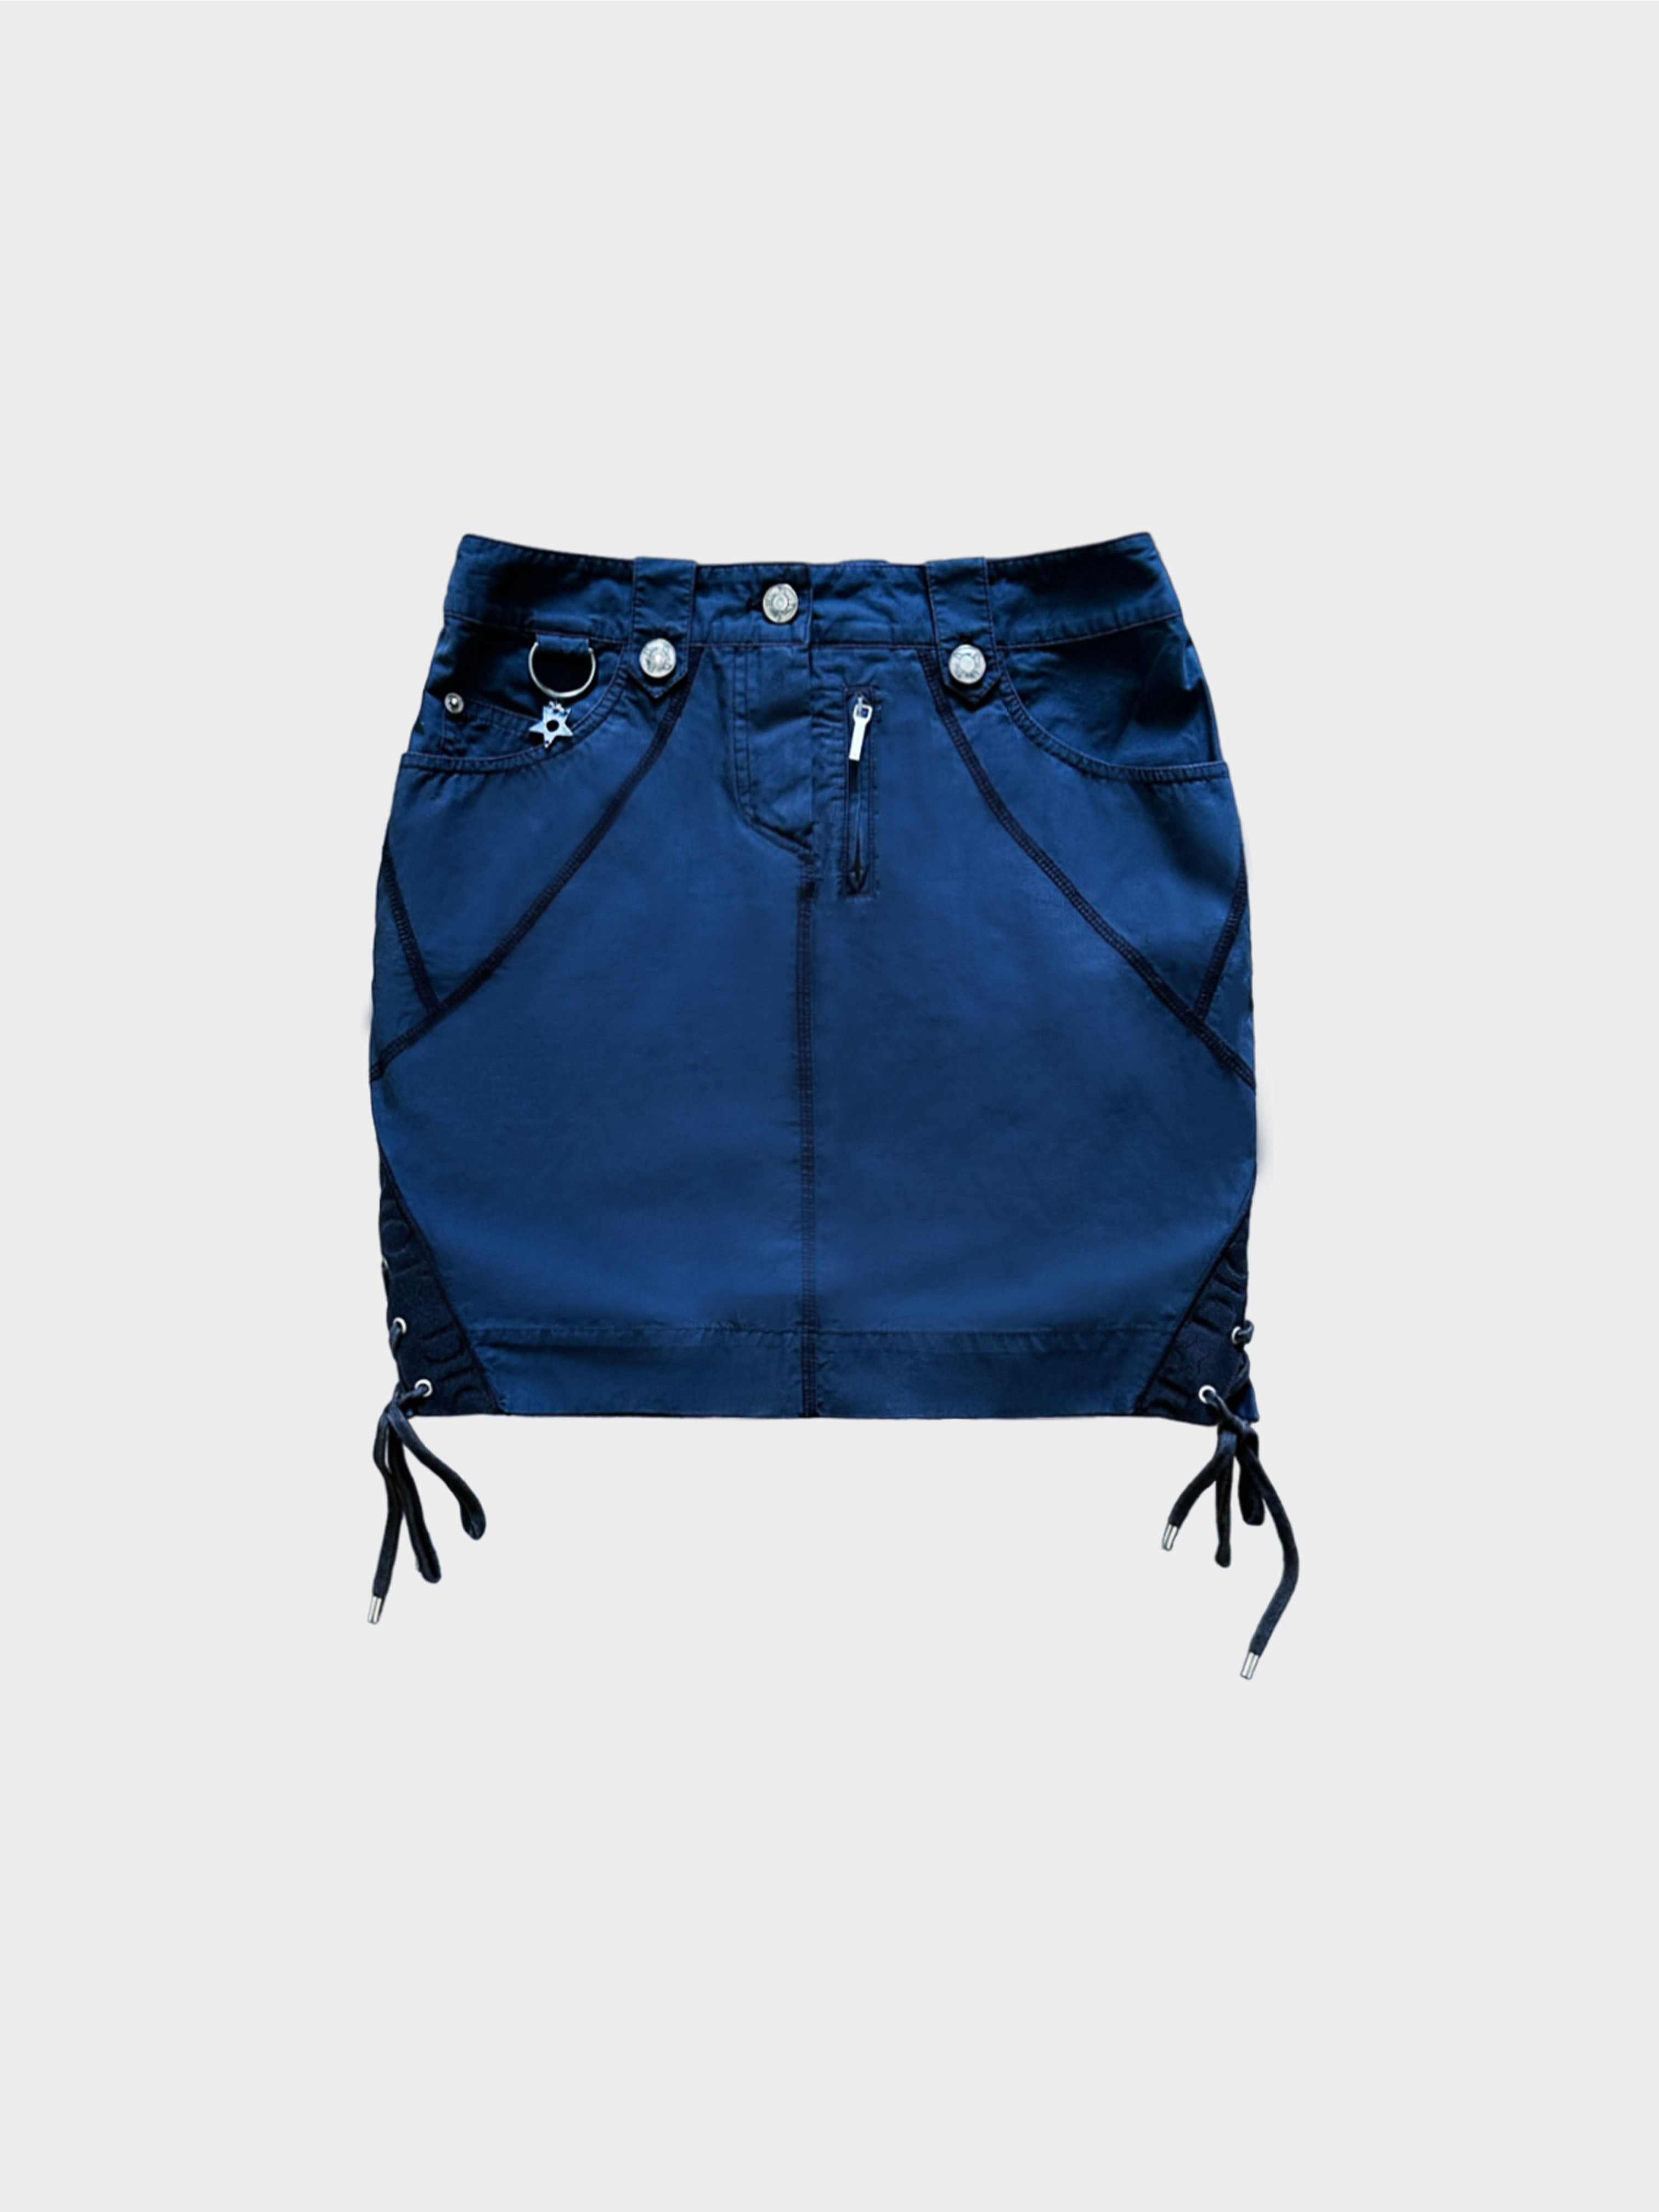 Christian Dior by John Galliano SS 2004 Blue Laced Mini Skirt